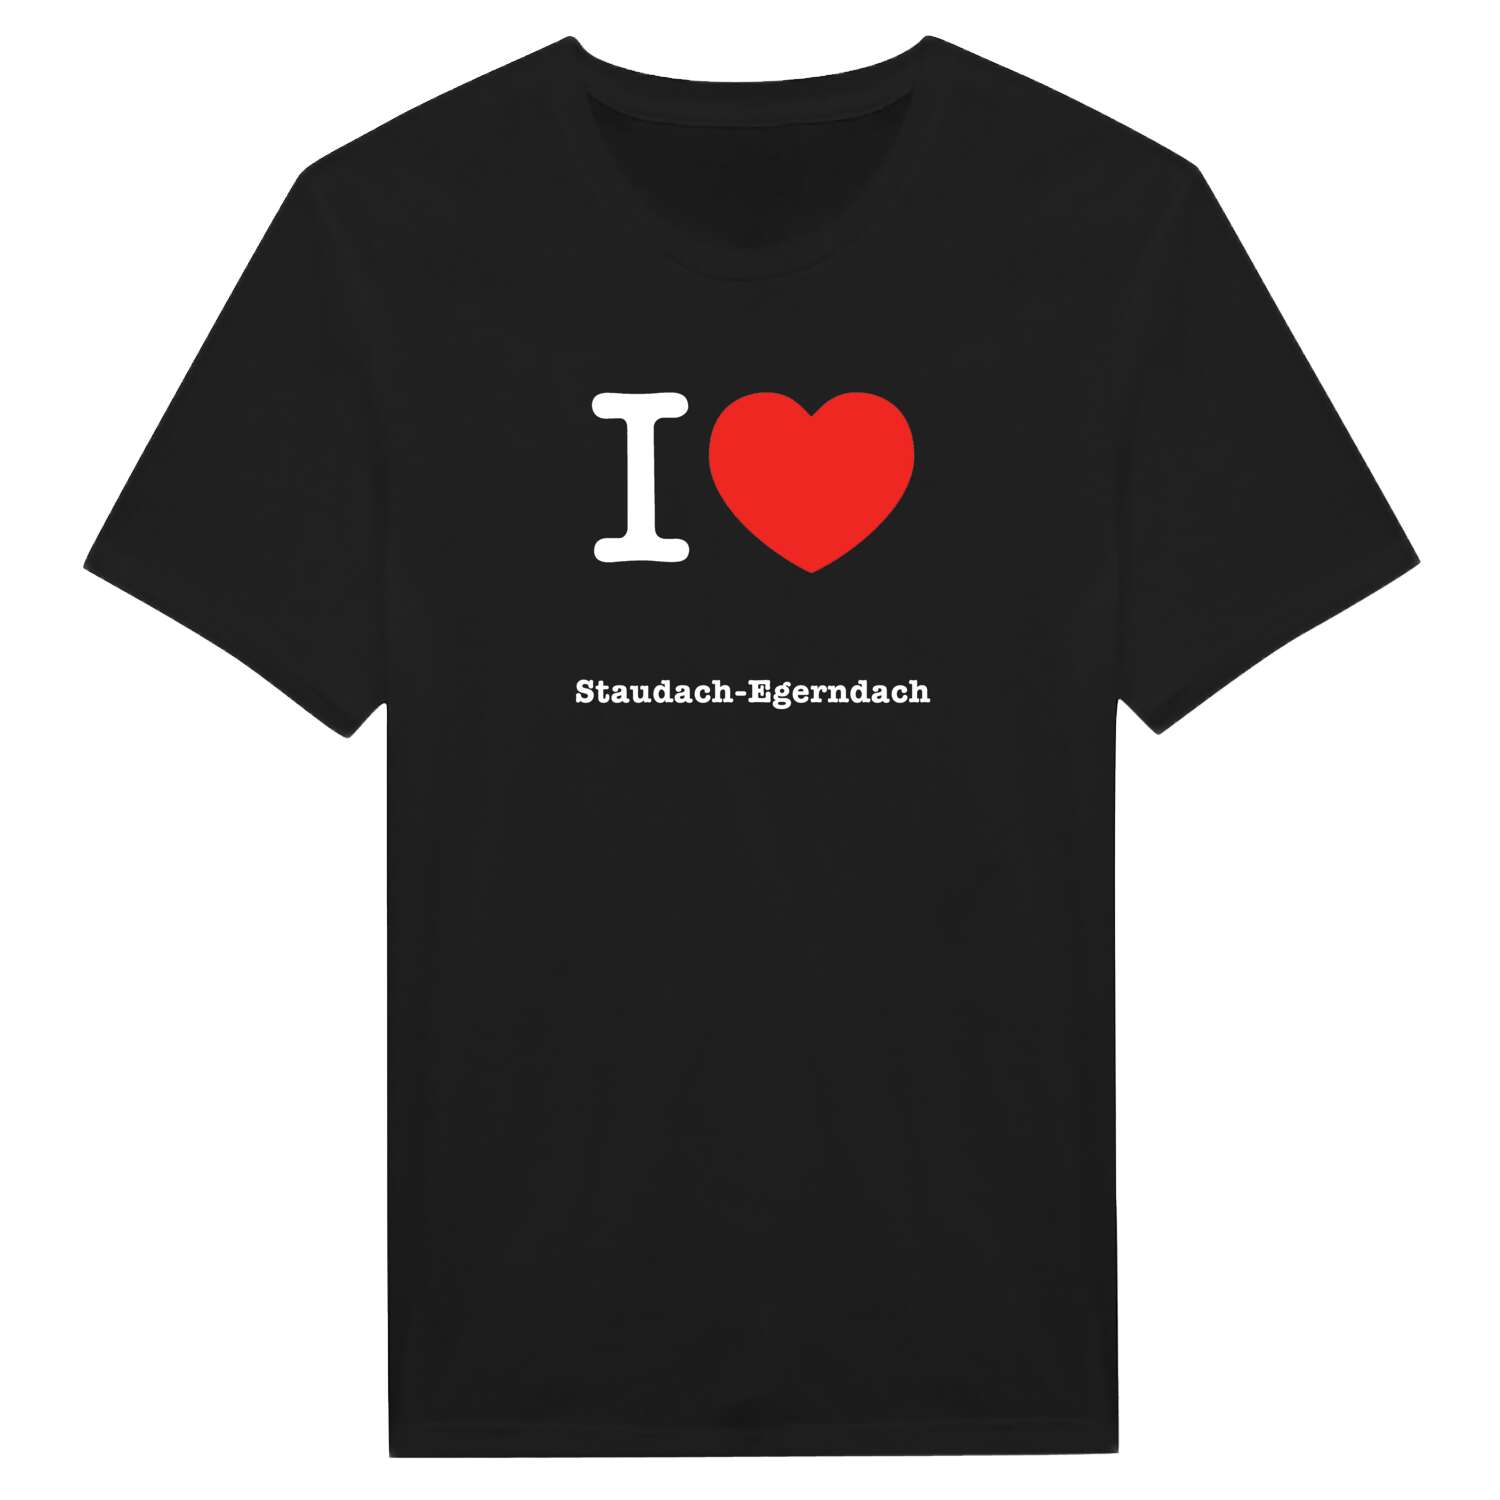 Staudach-Egerndach T-Shirt »I love«